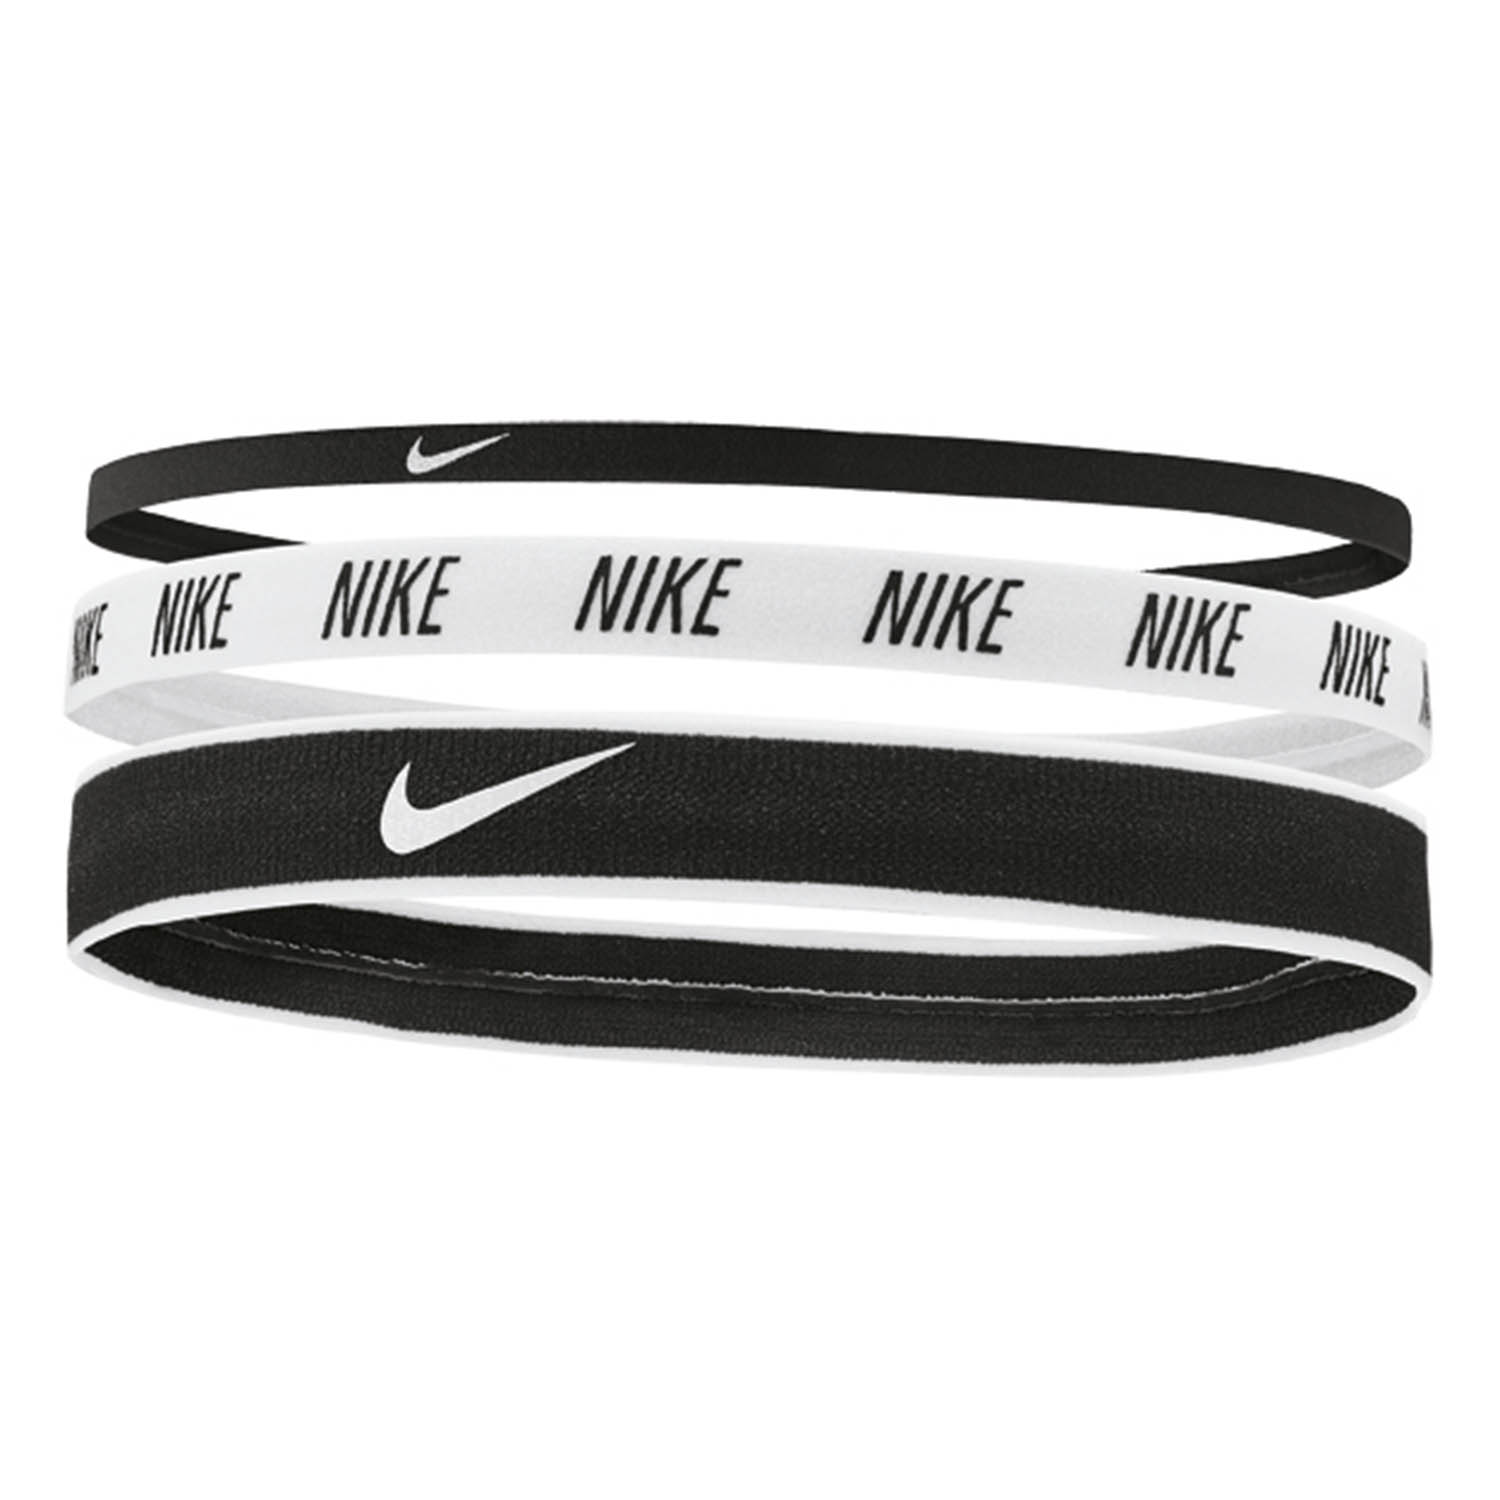 Nike Logo x 3 Mini Bandas - Black/White